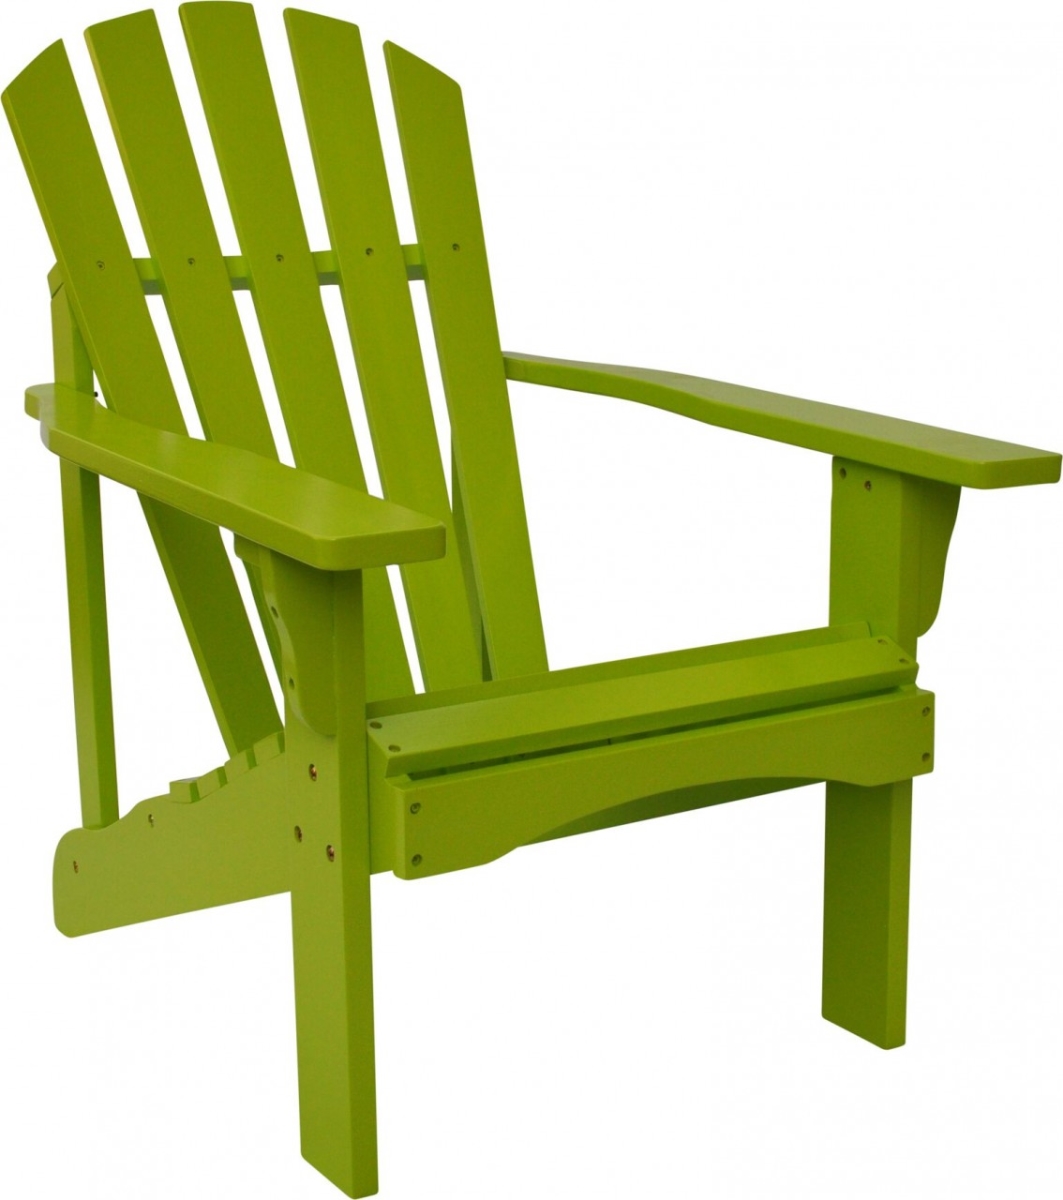 Shineco 4617lg Rockport Adirondack Chair, Lime Green